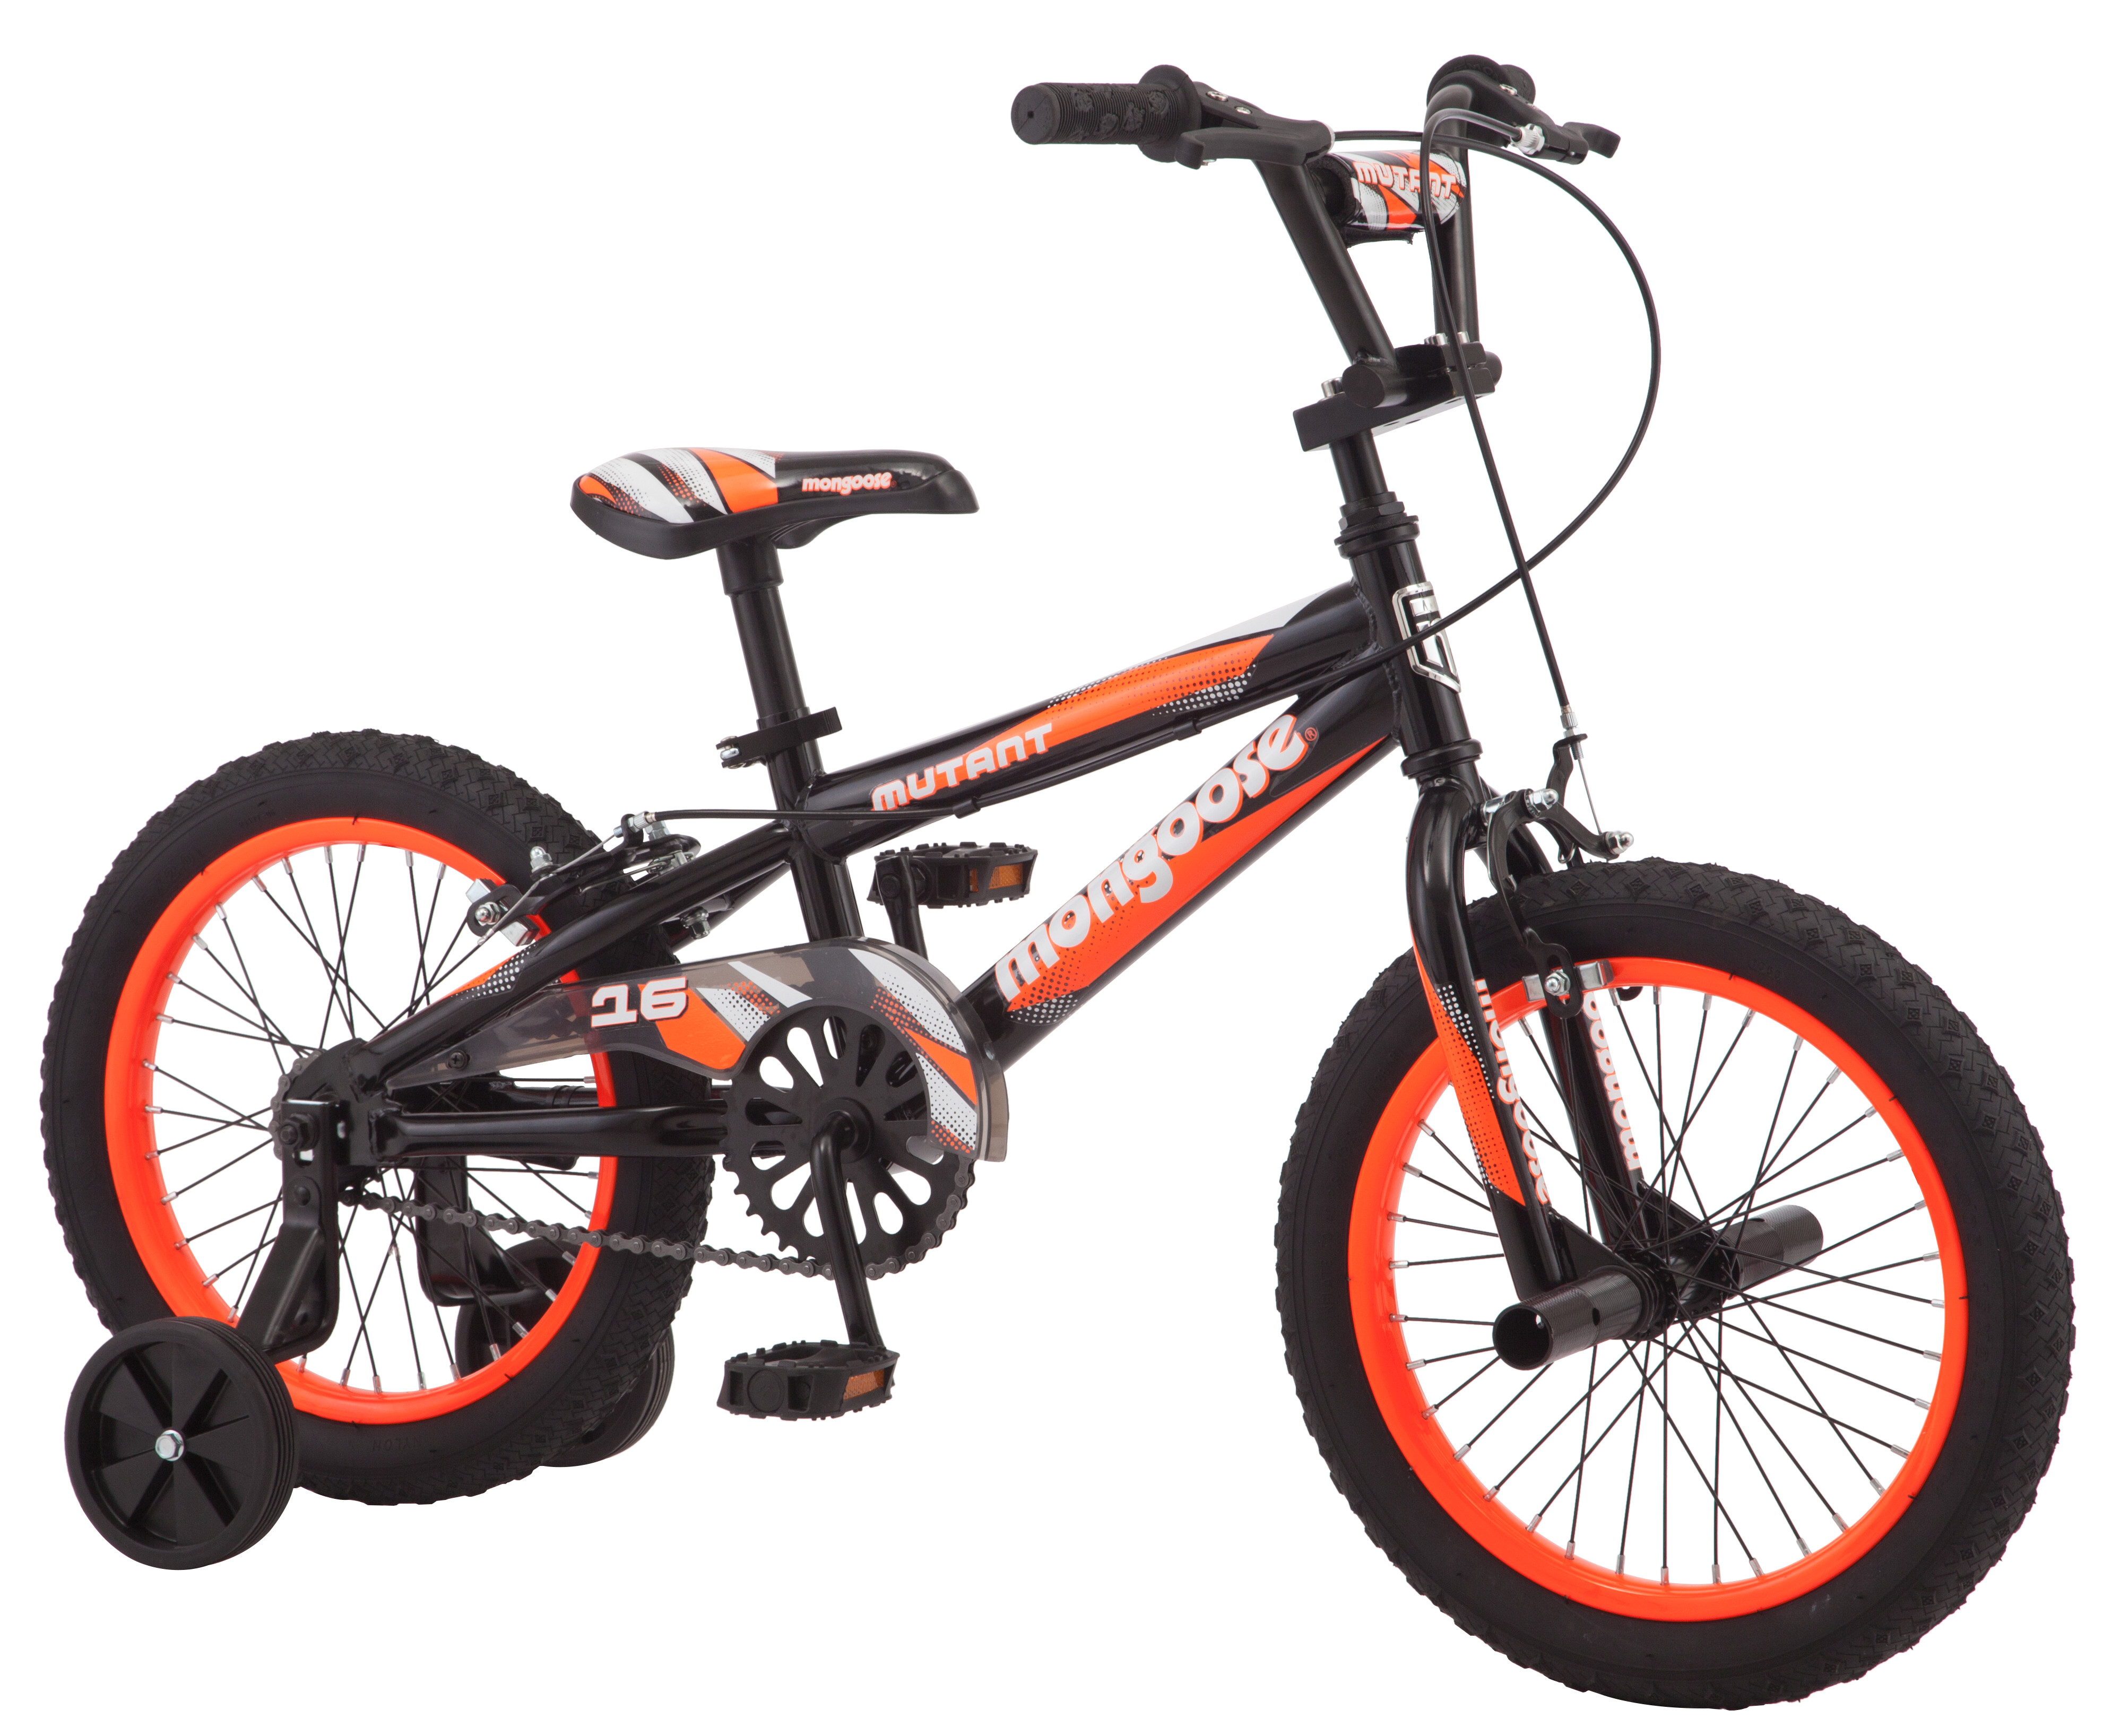 Boys Bike 16" Mongoose Mutant Kids BMX Bicycle with Training Wheels